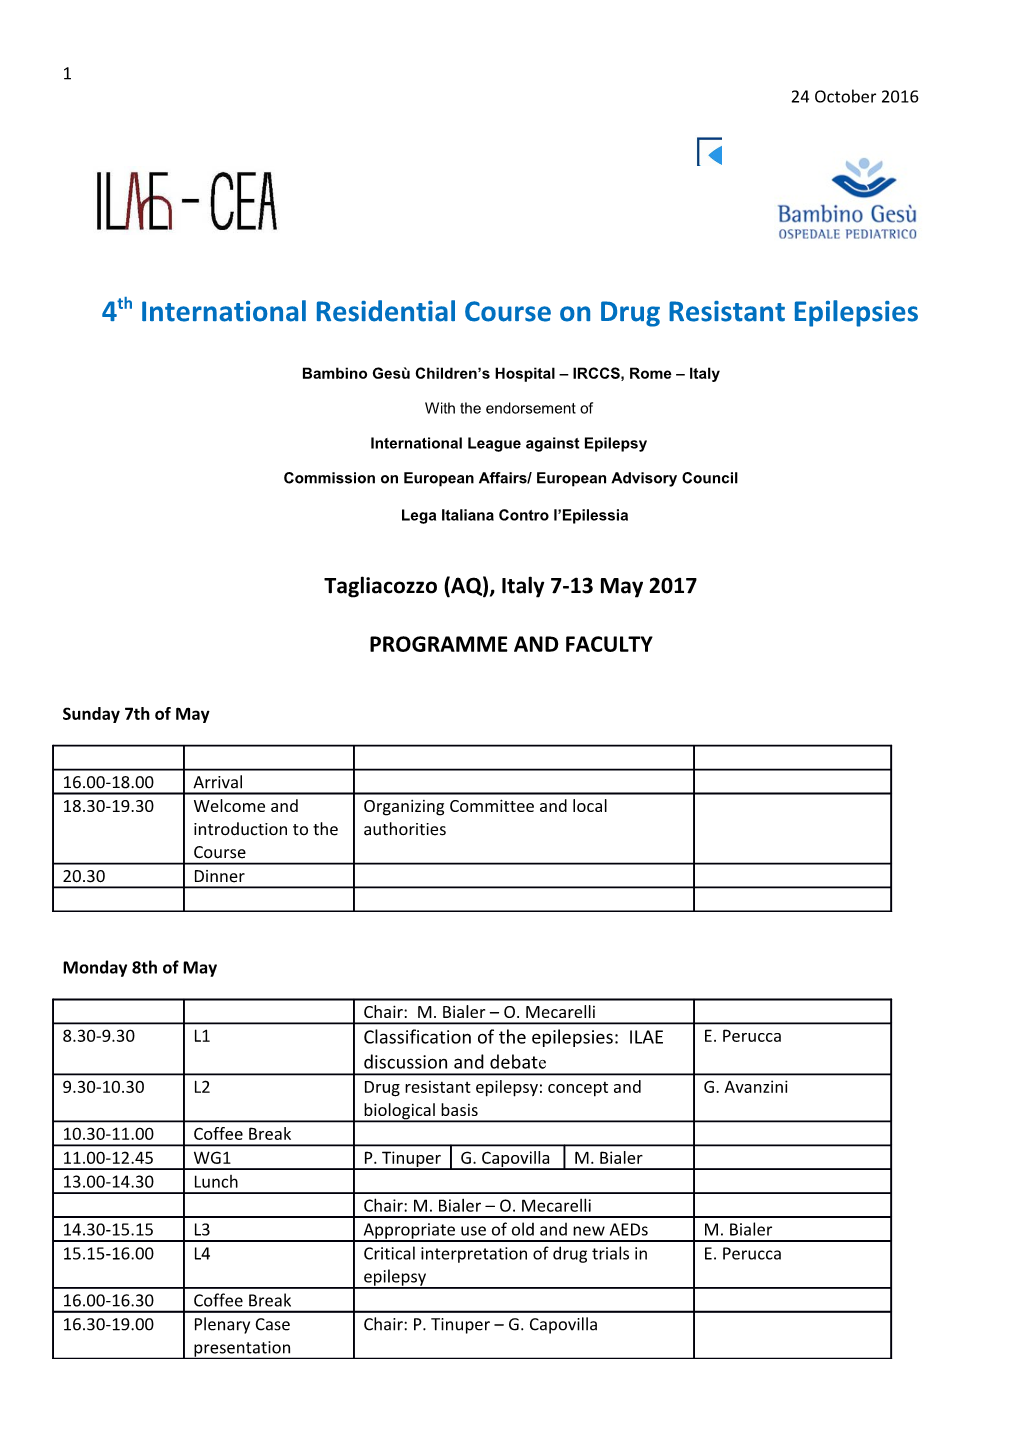 4Th International Residential Course on Drug Resistant Epilepsies